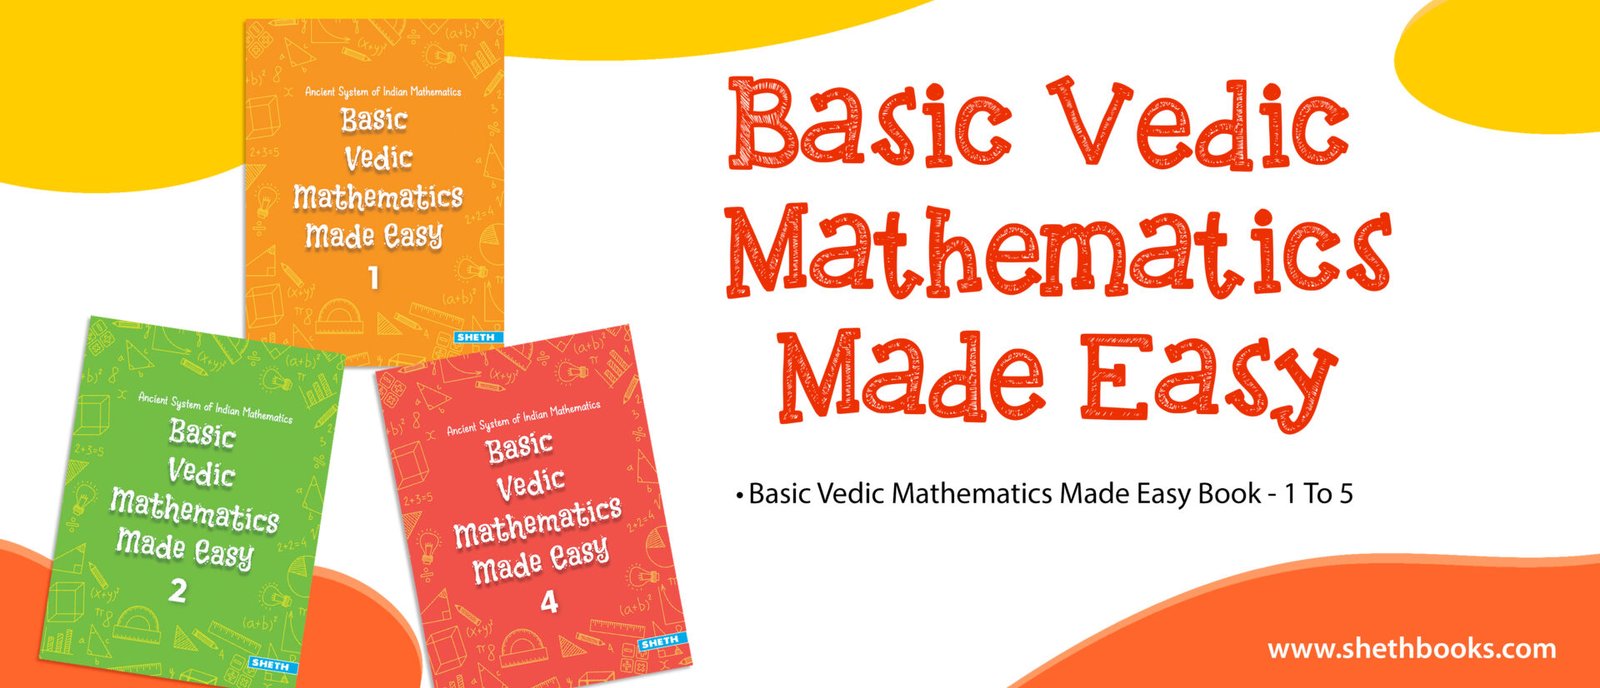 Vedic Maths Book